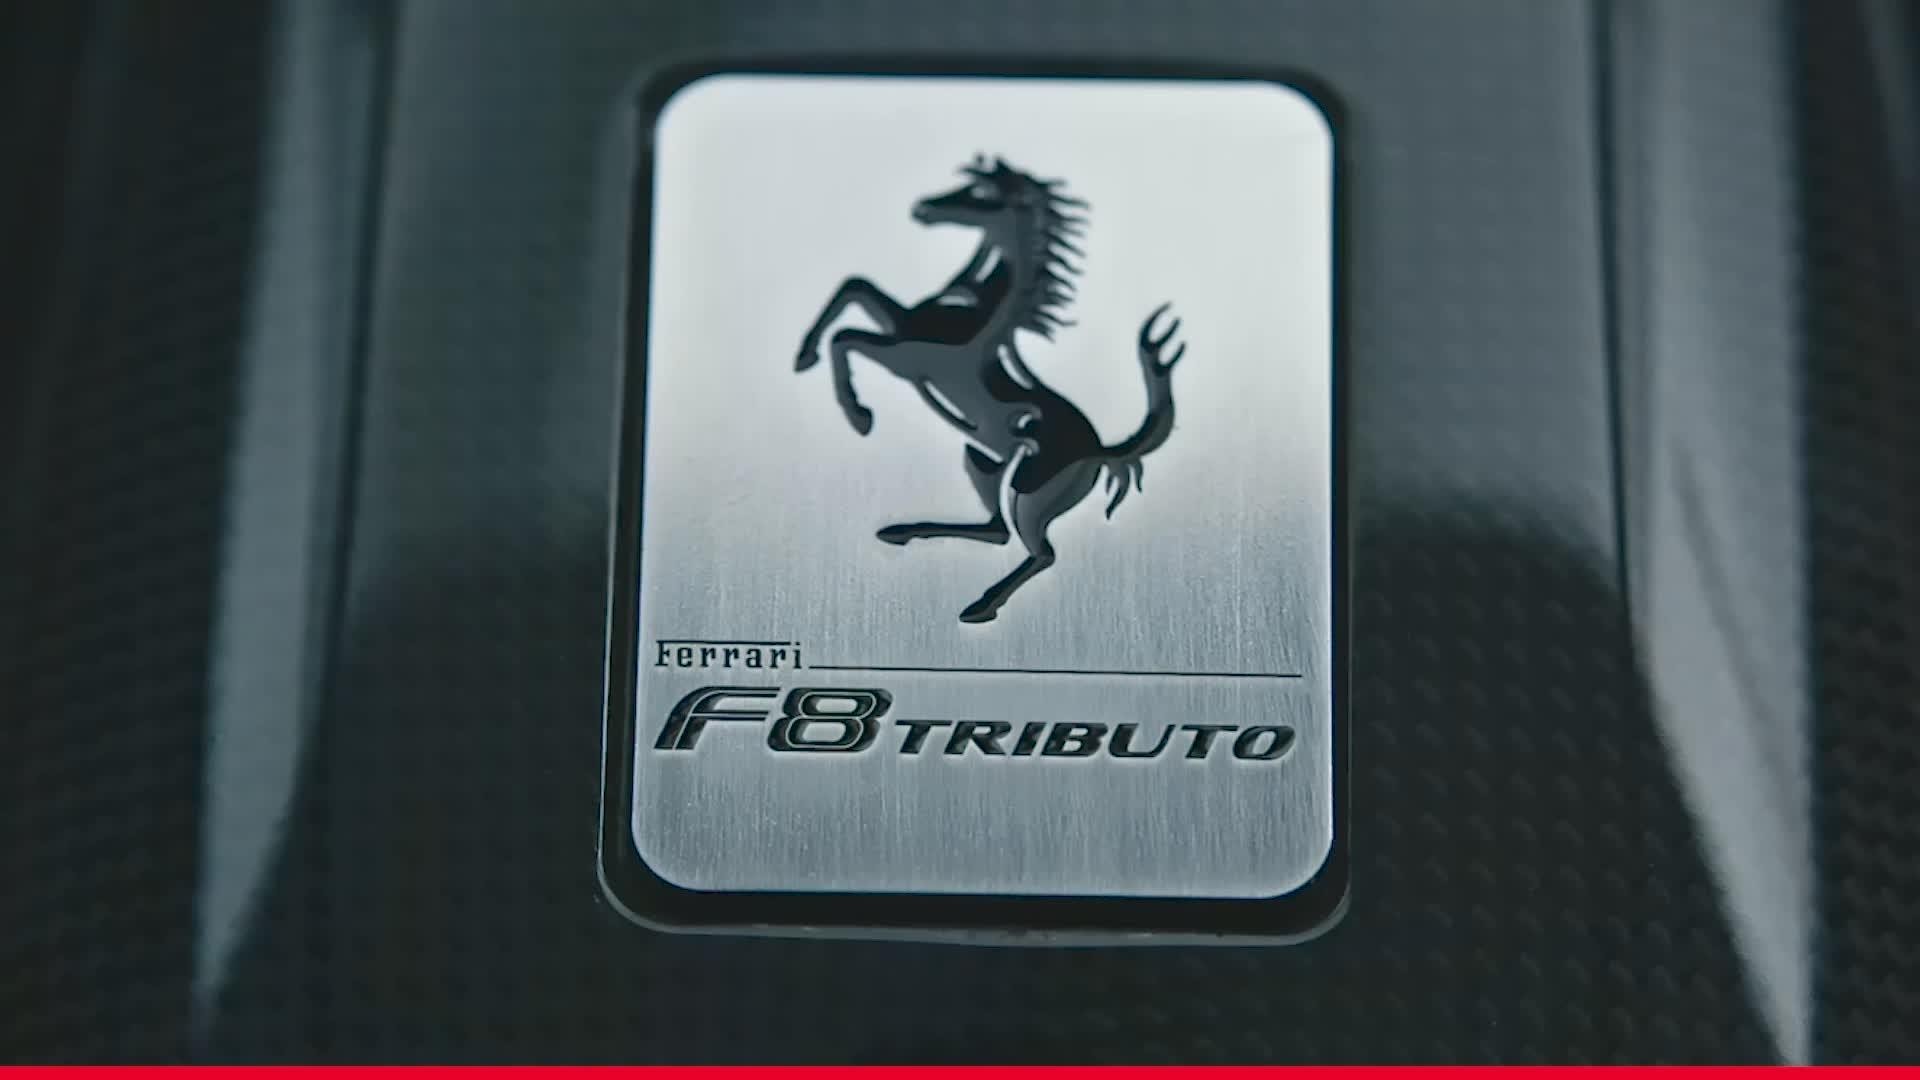 Ferrarif8tributoteaservideolancio